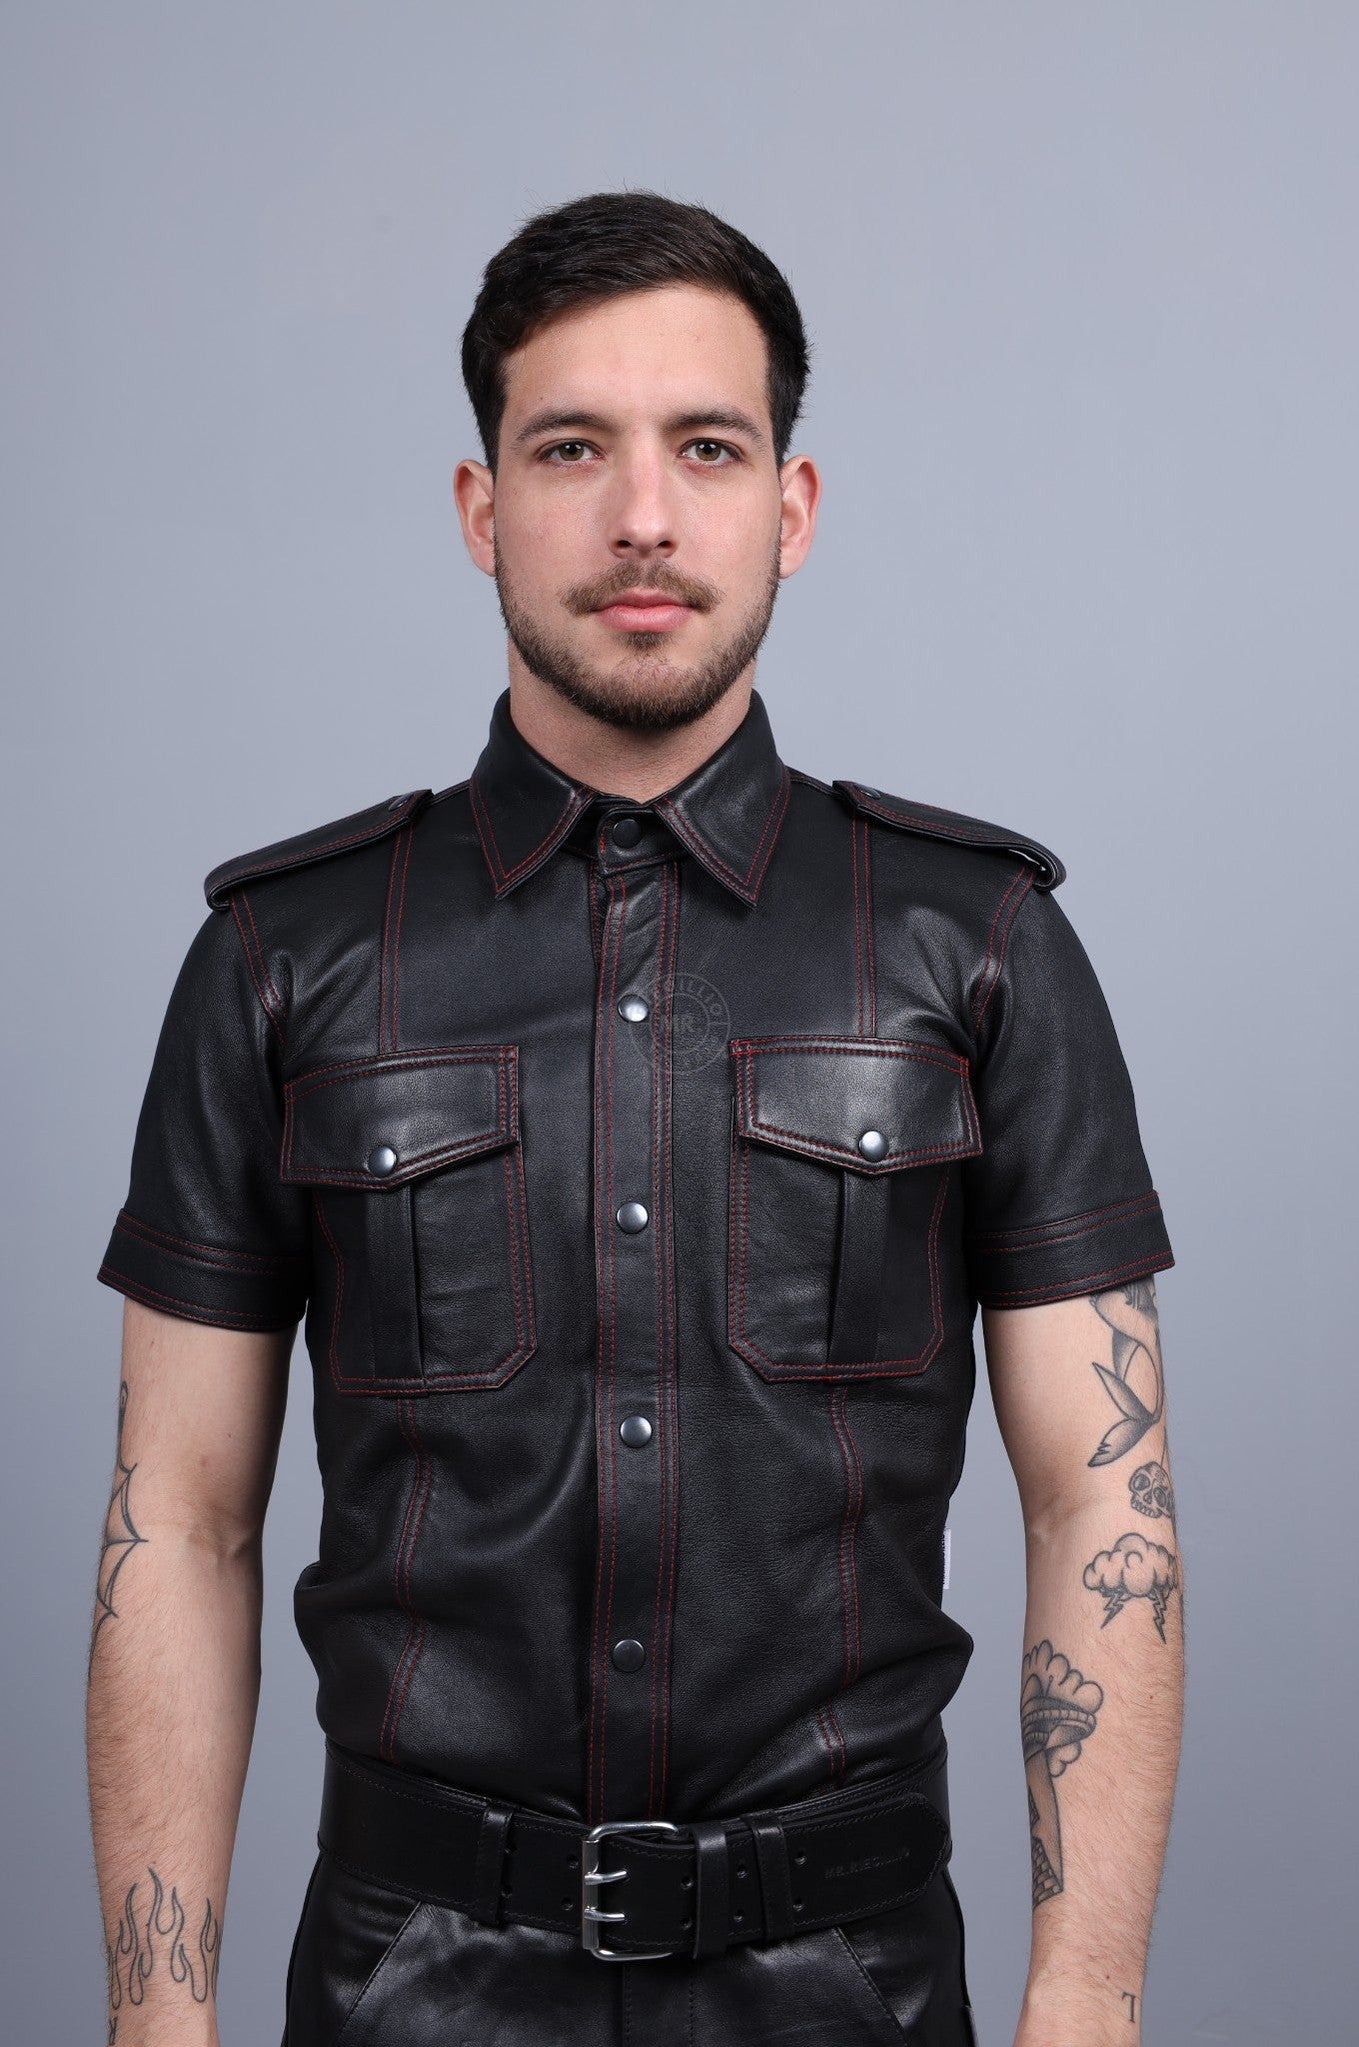 Black Leather Shirt - Red Stitching at MR. Riegillio